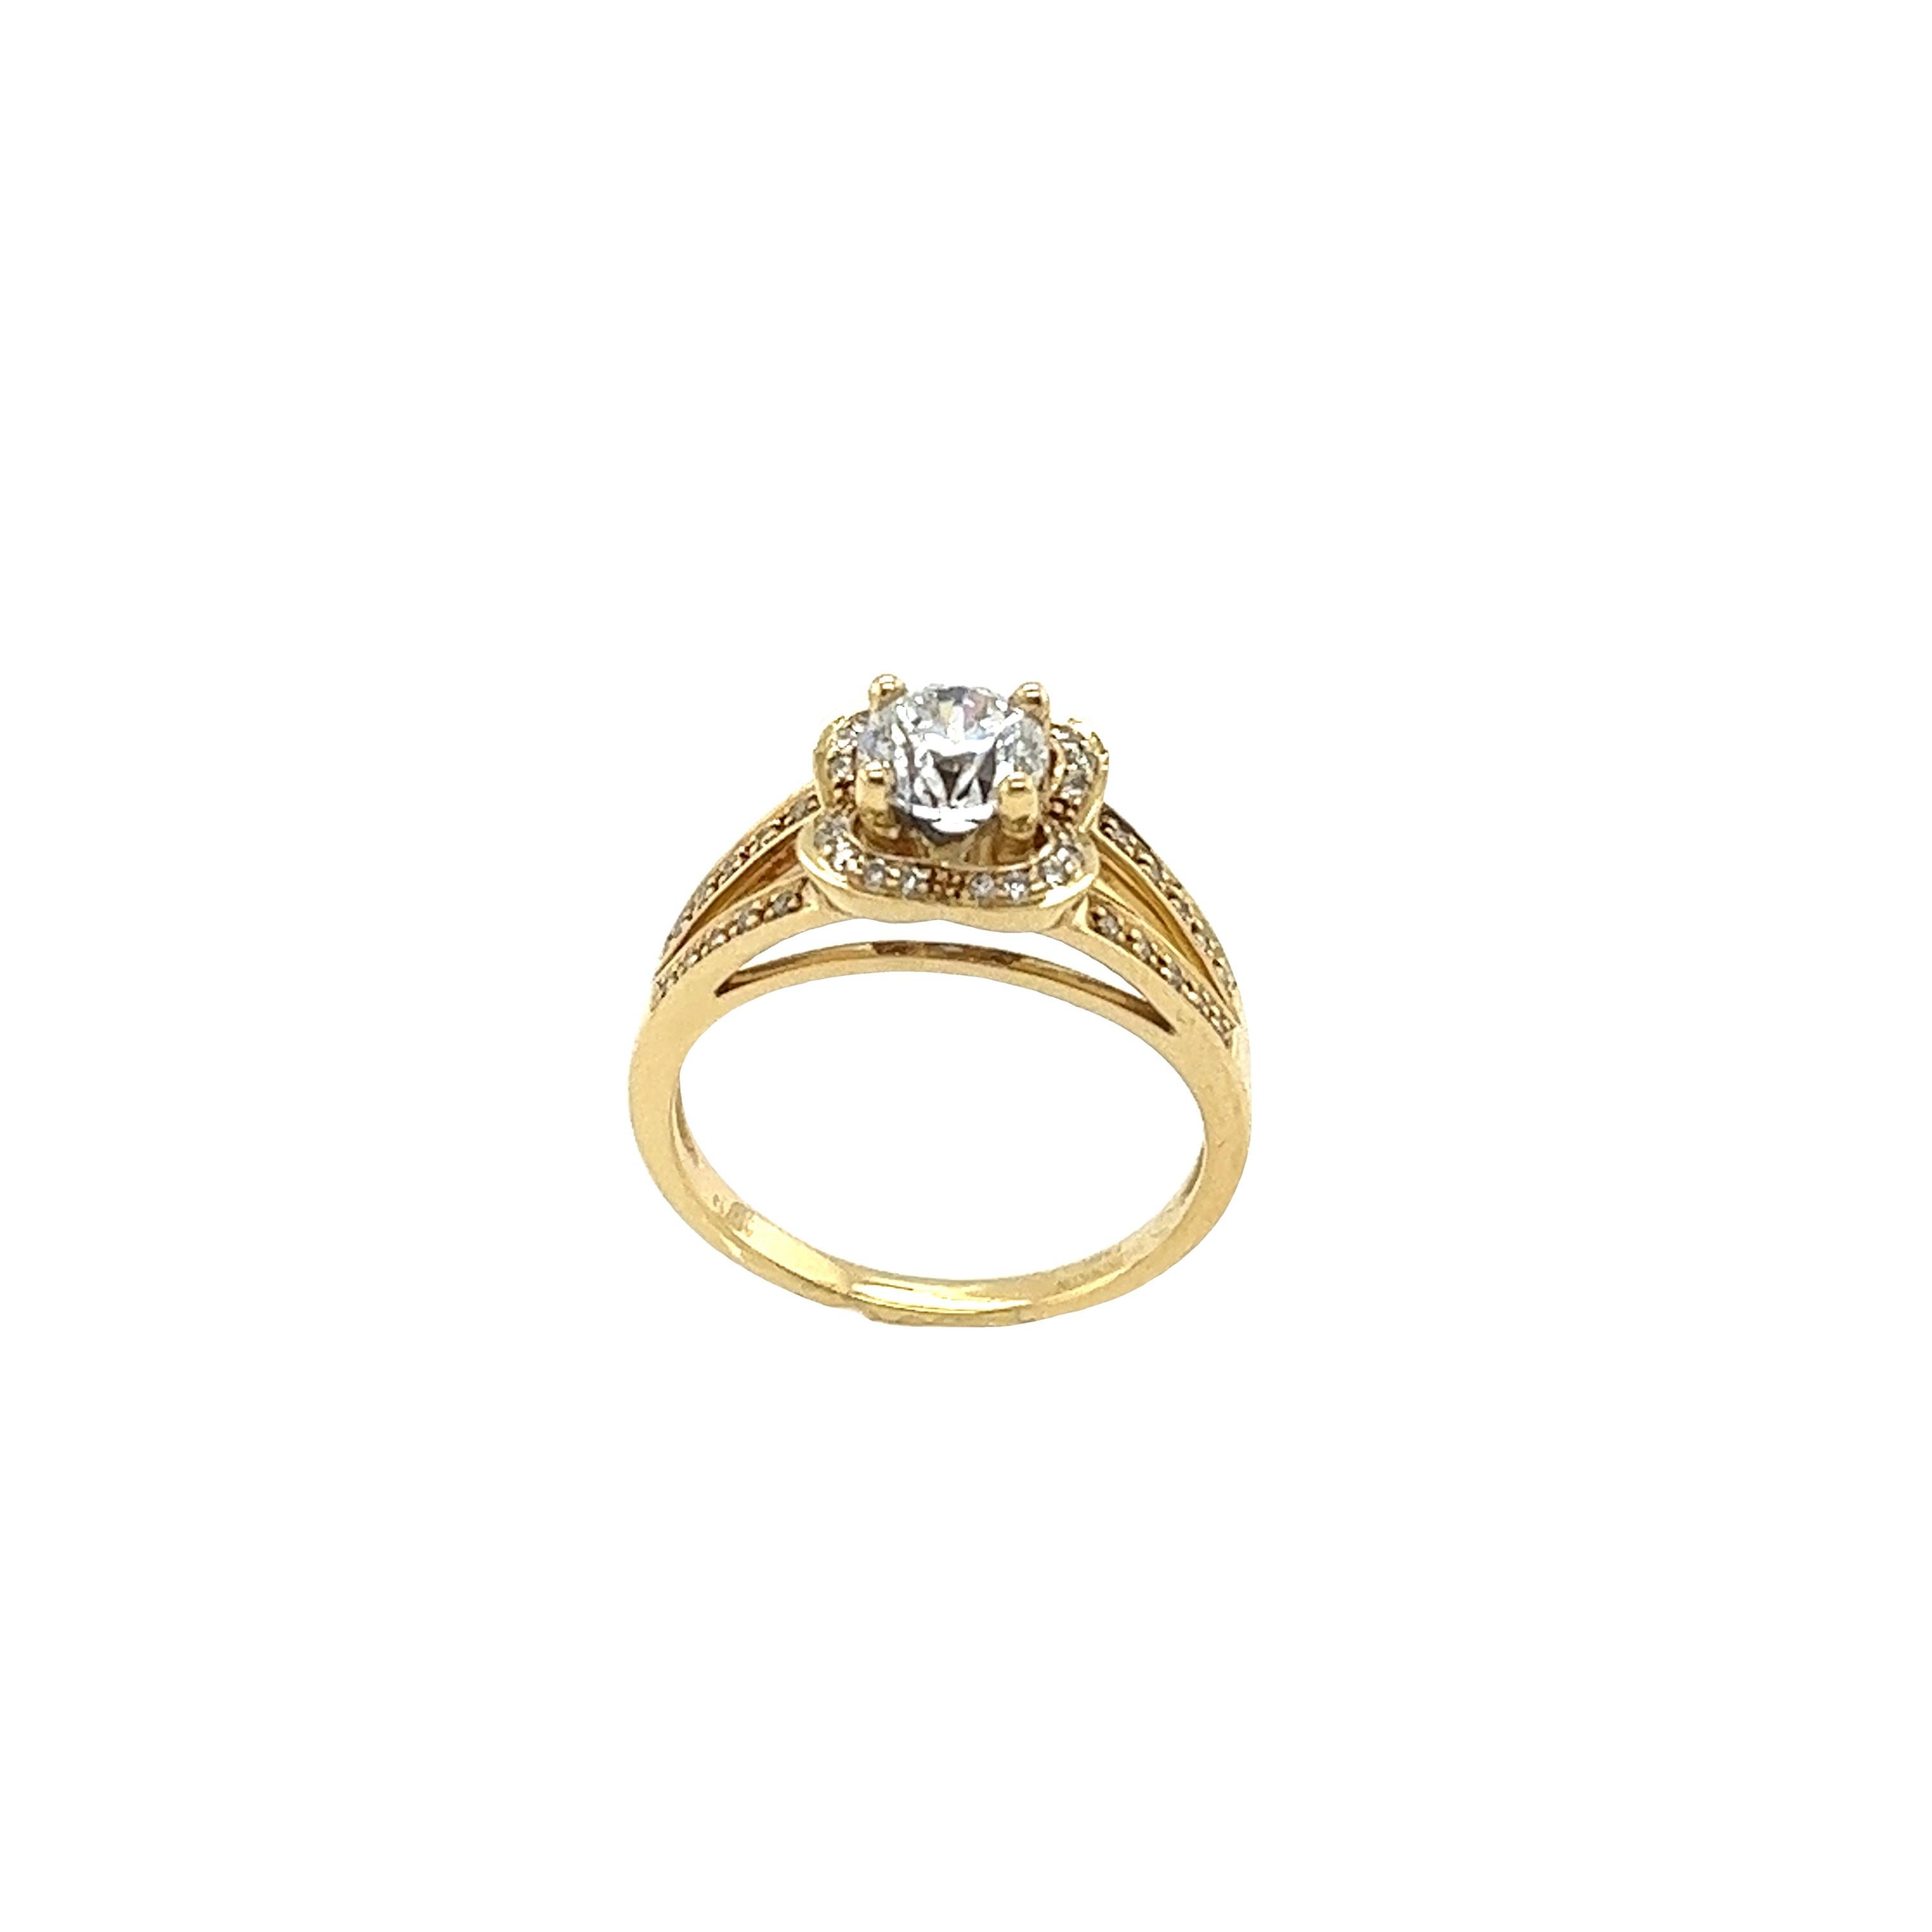 Mauboussin 18ct Yellow Gold Diamond Ring, Set With 0.90ct Gia D/VS1 Diamond For Sale 2